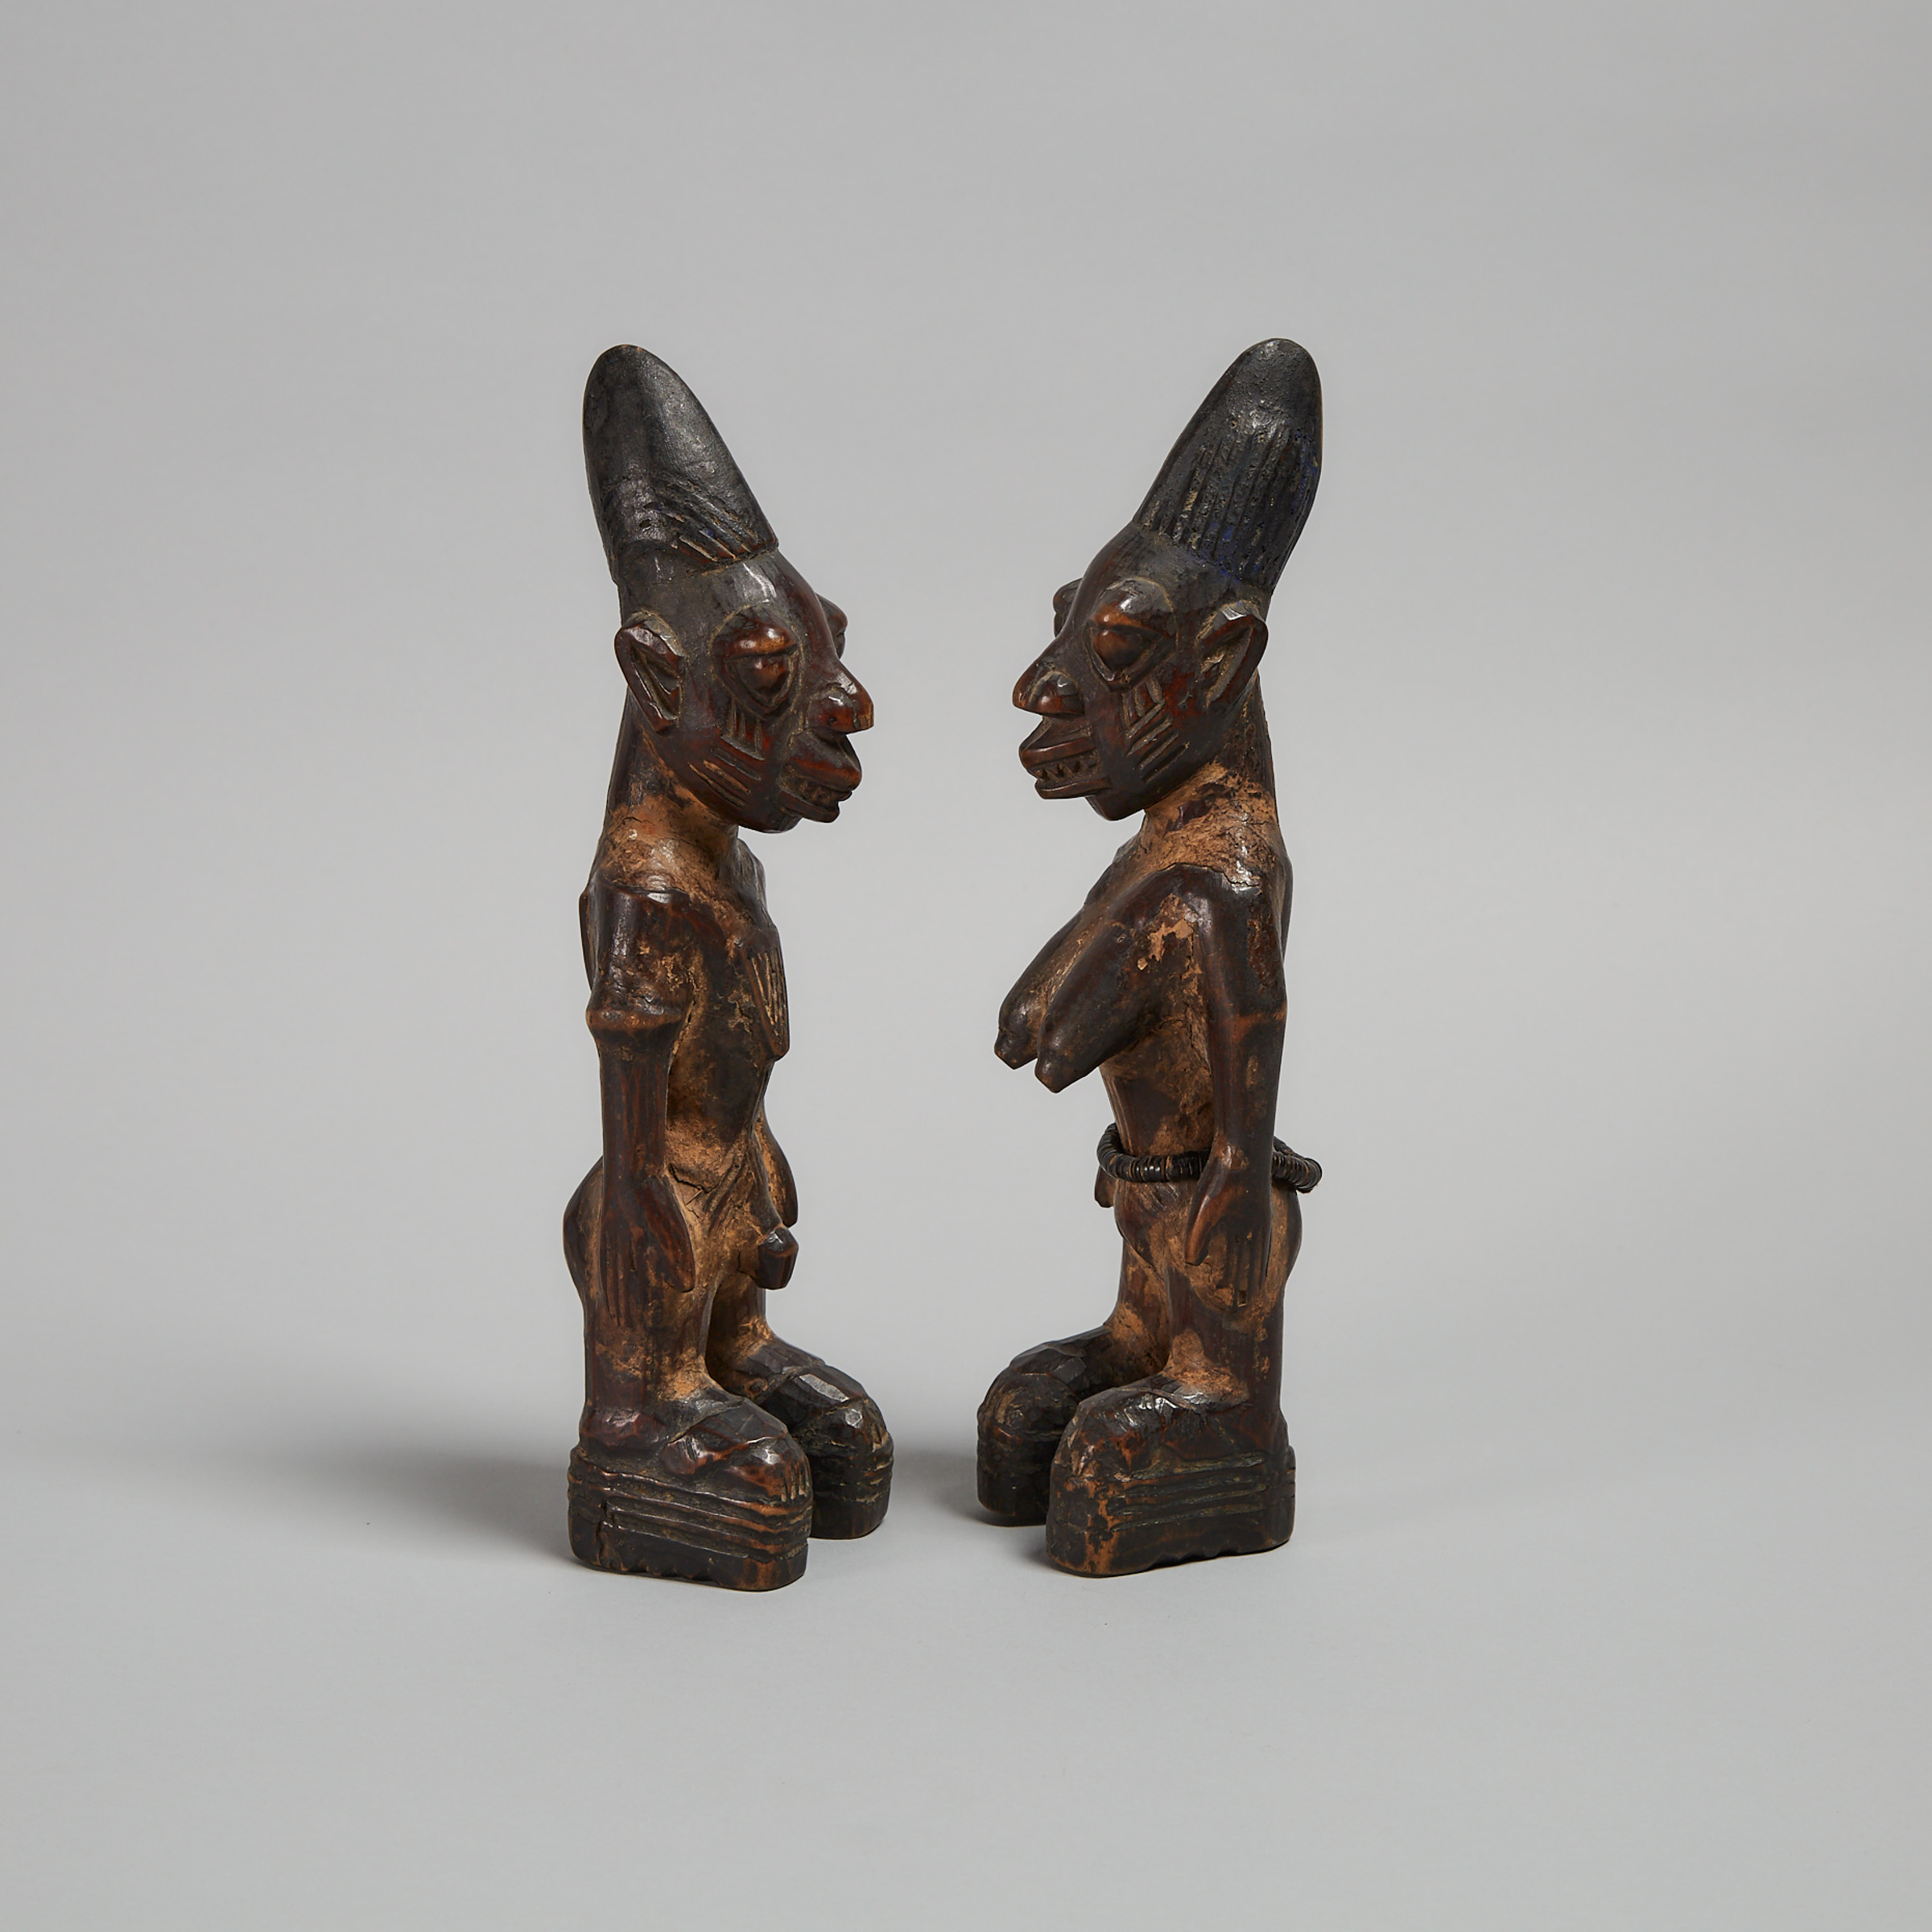 Pair of Yoruba Male and Female Ibeji Twin Figures, West Africa